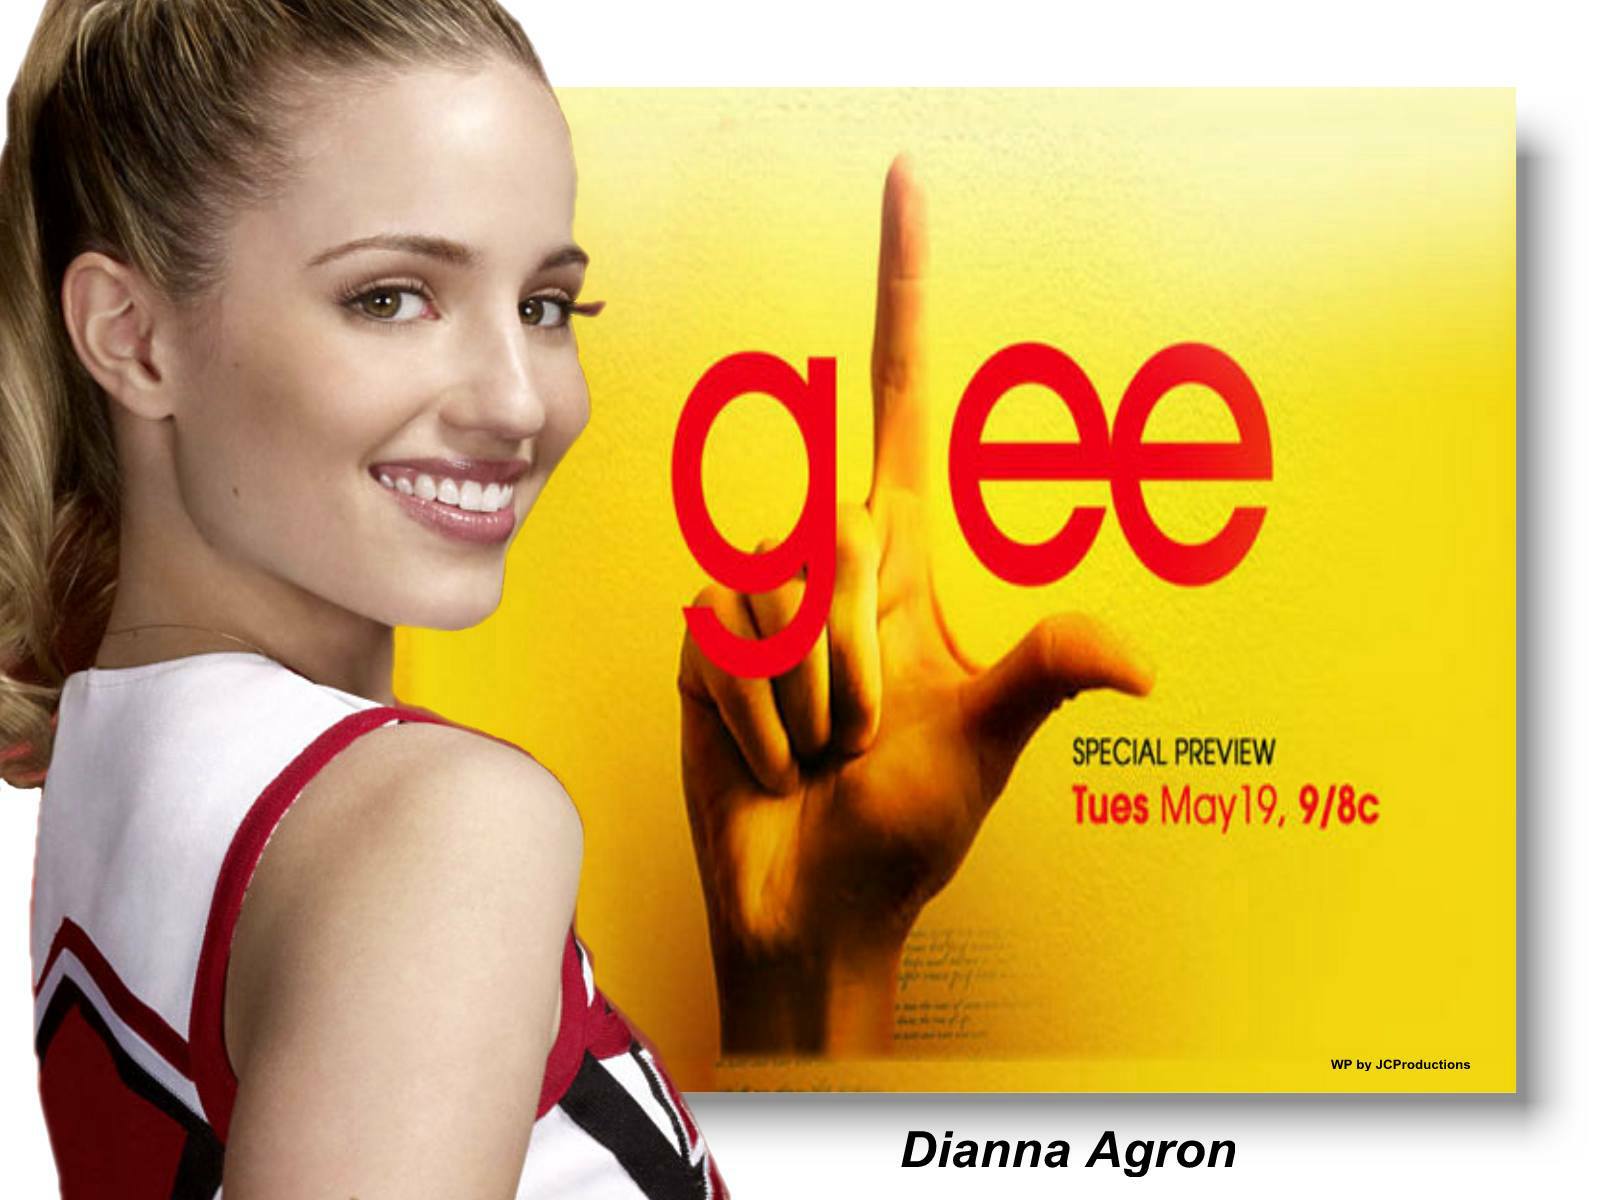 Dianna Agron of Glee